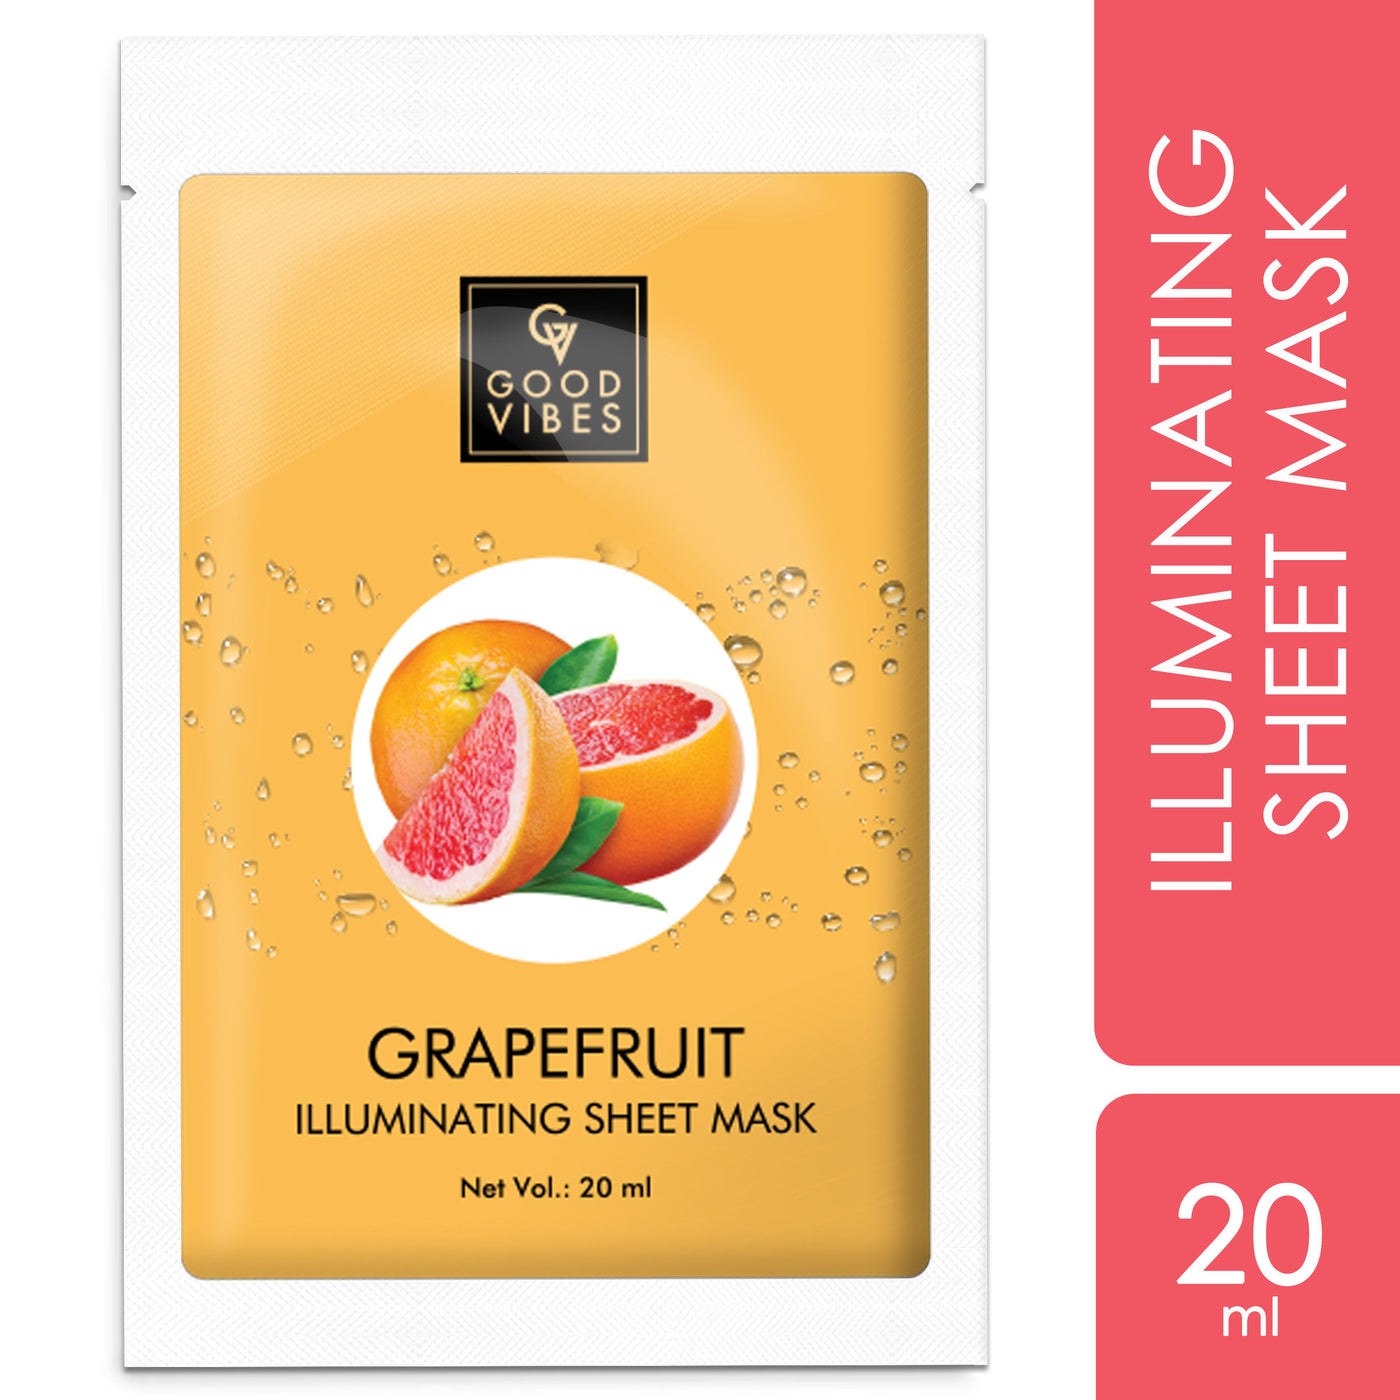 Good Vibes Illuminating Sheet Mask - Grapefruit (20 ml) - 1